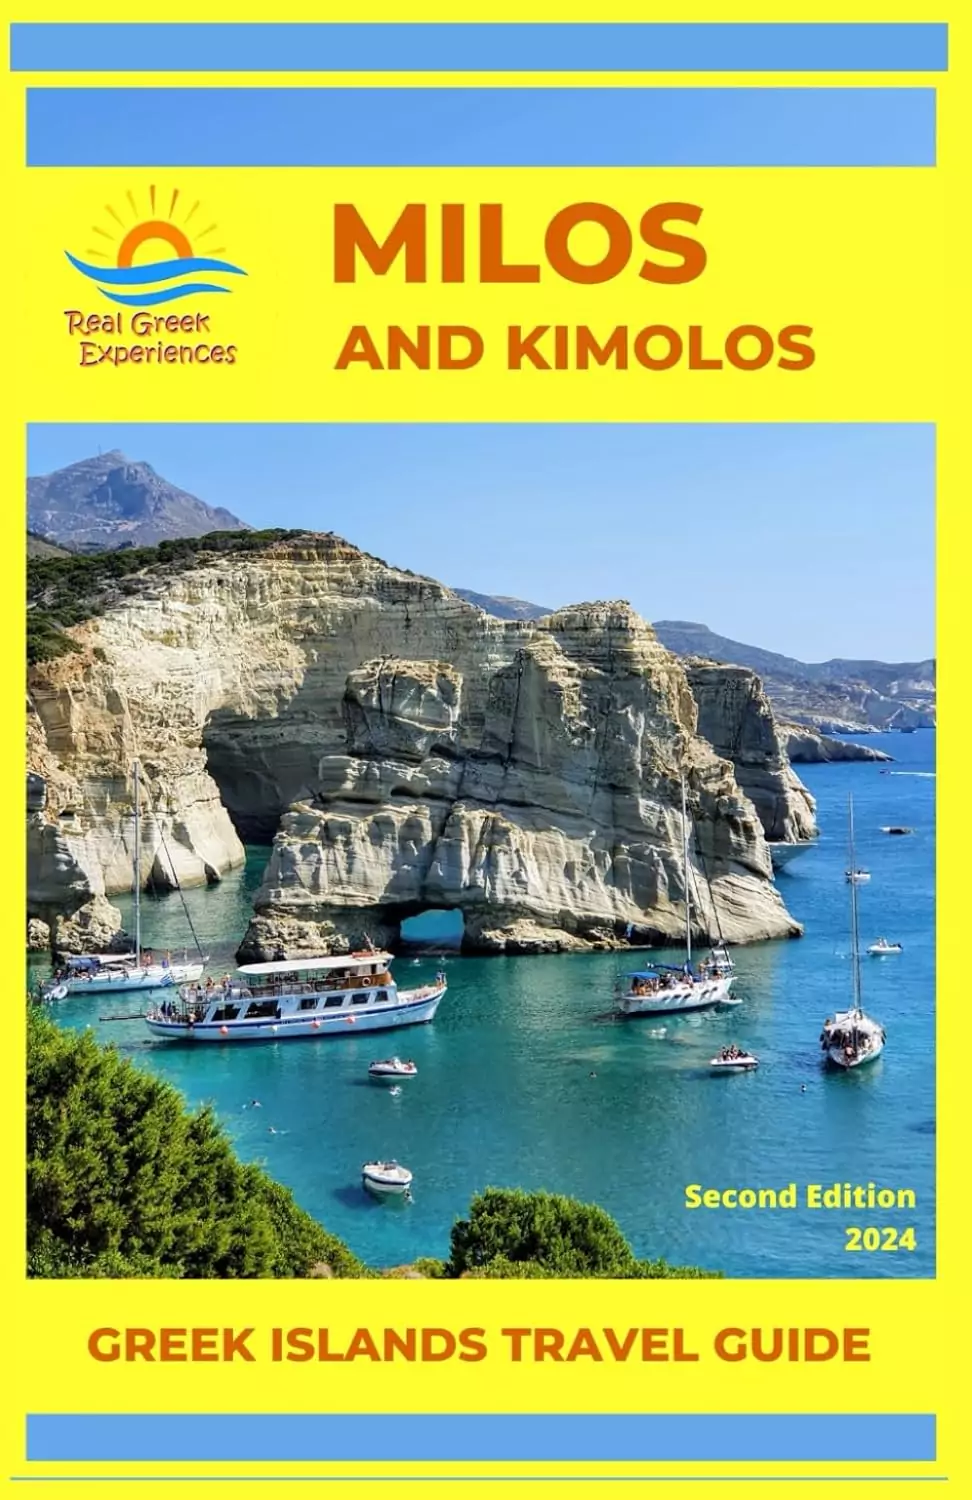 Book about Milos and Kimolos